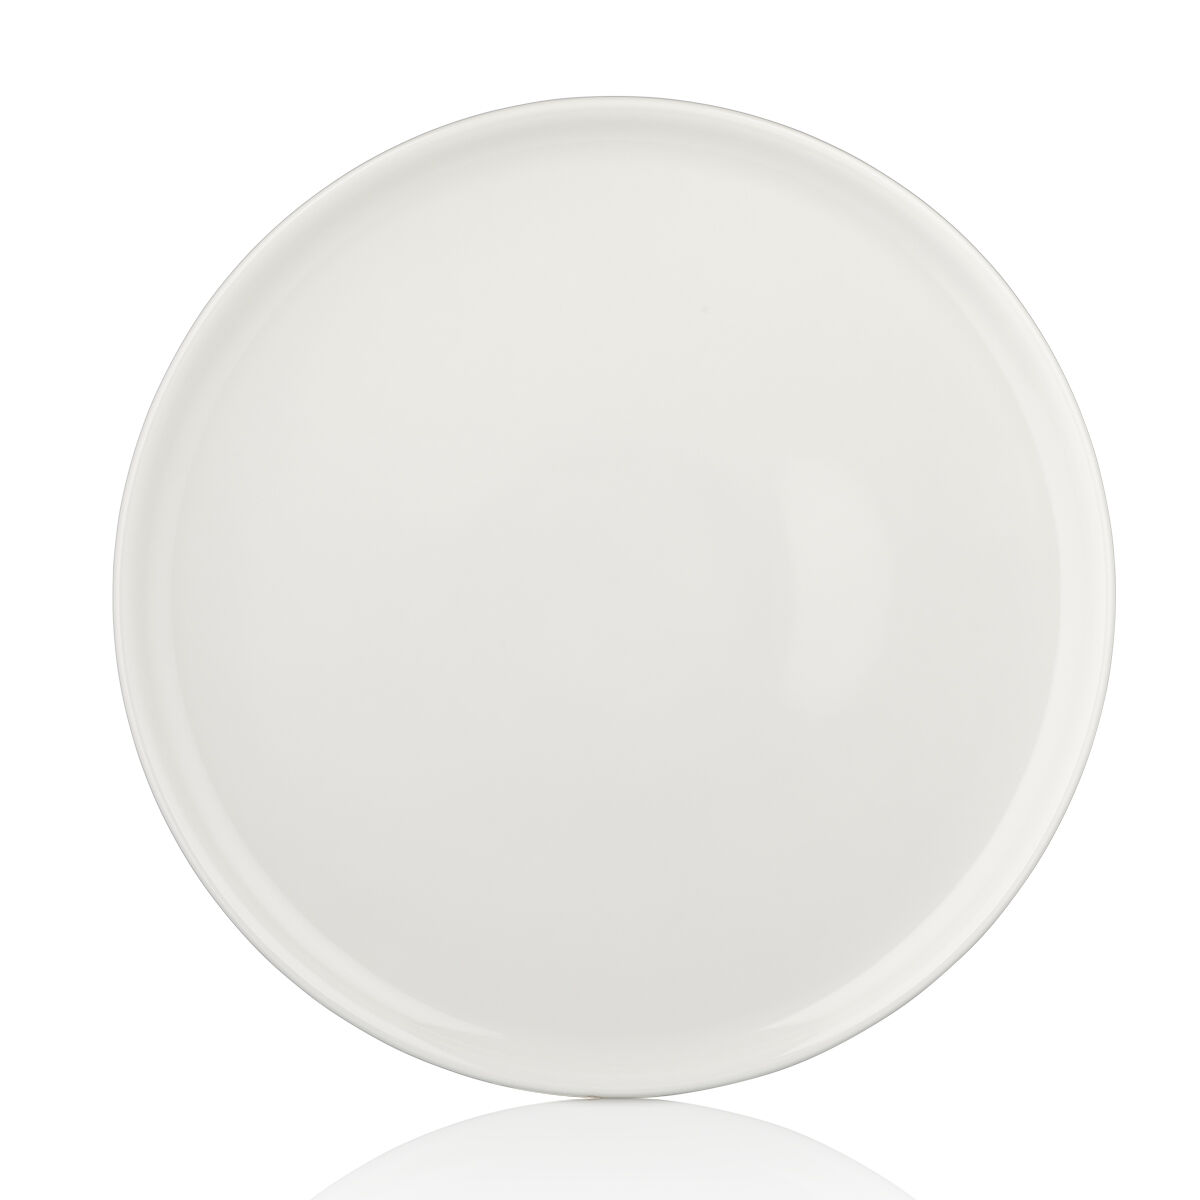 Тарелка для пиццы d = 32 см, фарфор, серия "Arel", By Bone